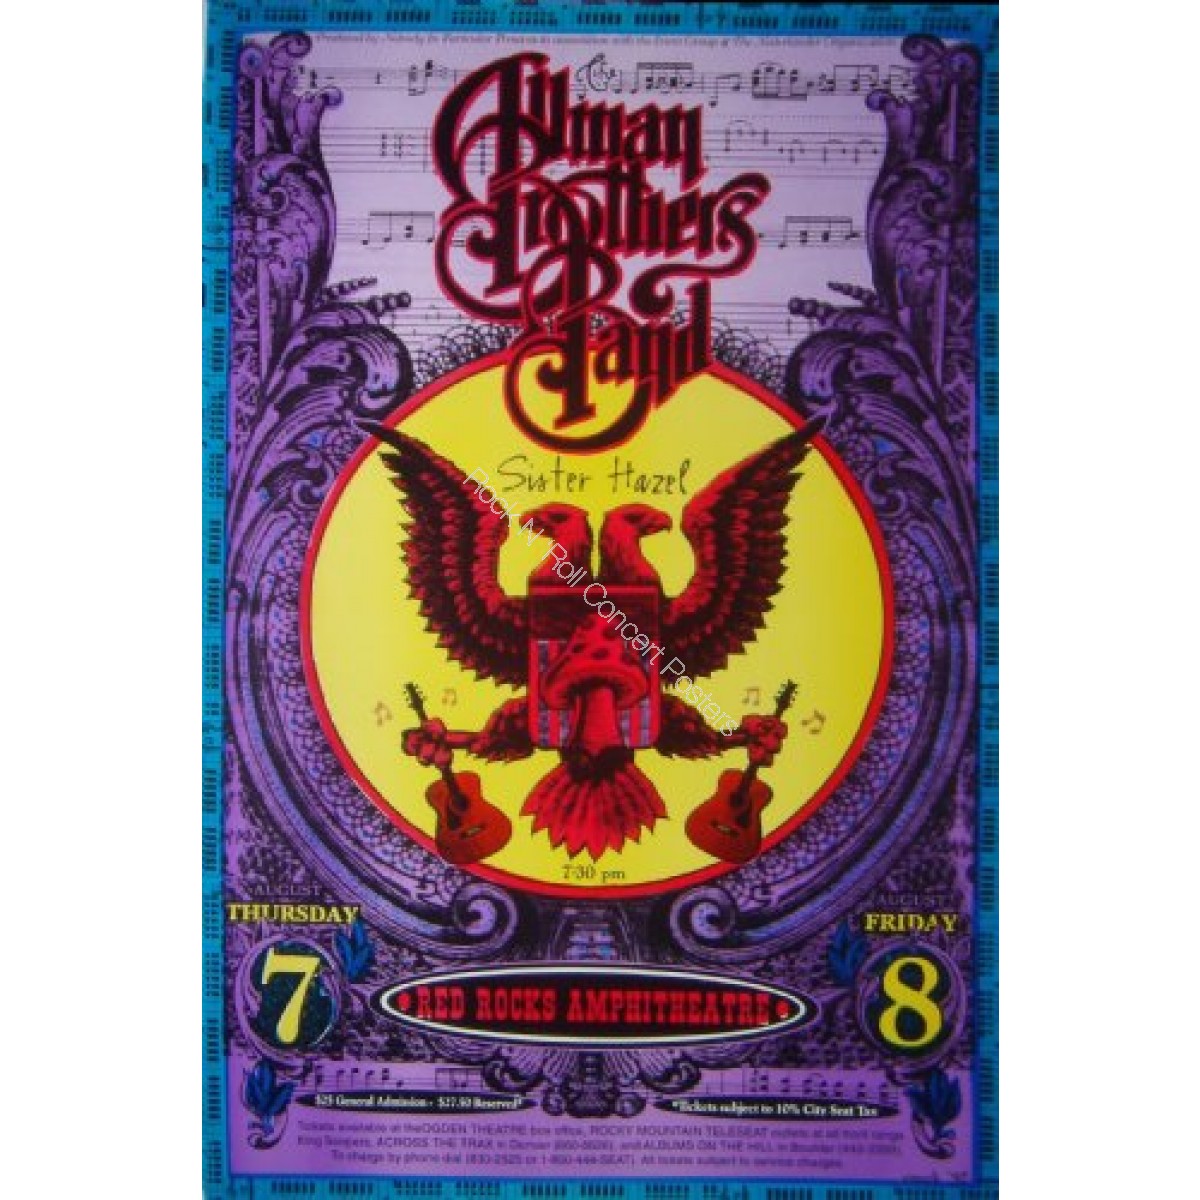 Allman Brothers Red Rocks 8/7-8/97 by Emek